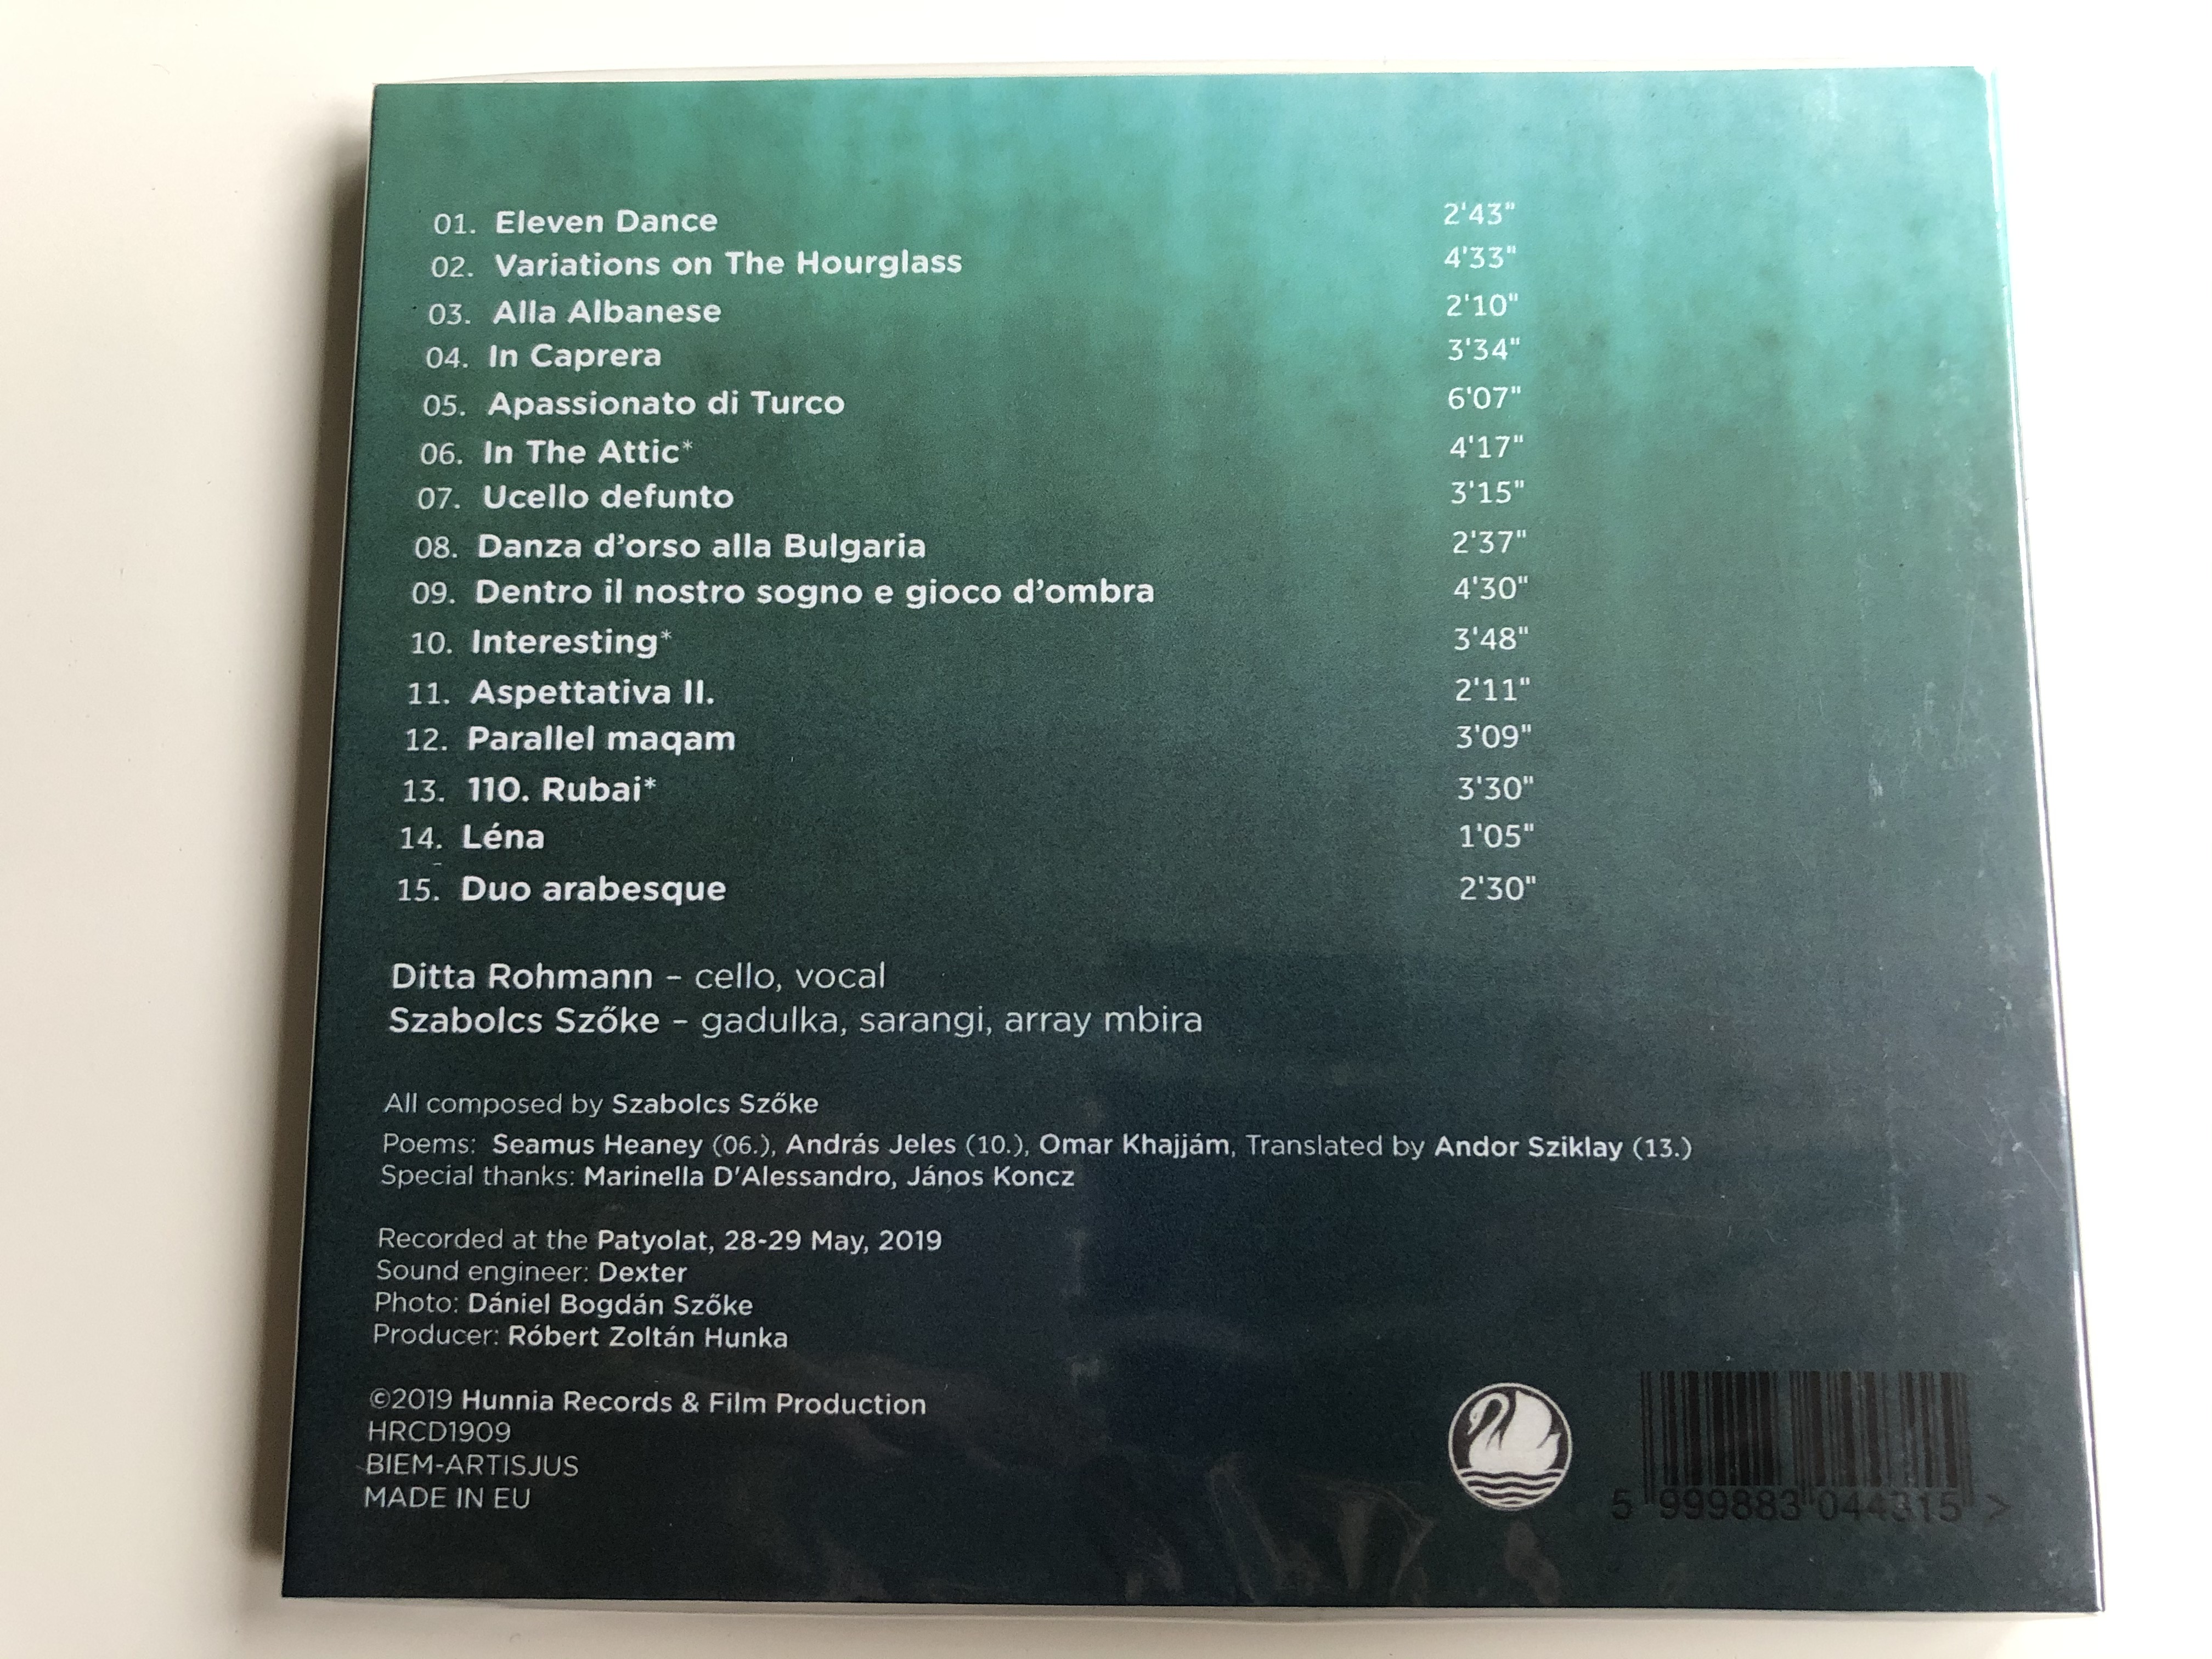 duetti-paralleli-ditta-rohmann-szabolcs-szoke-hunnia-records-film-production-audio-cd-2019-hrcd1909-2-.jpg